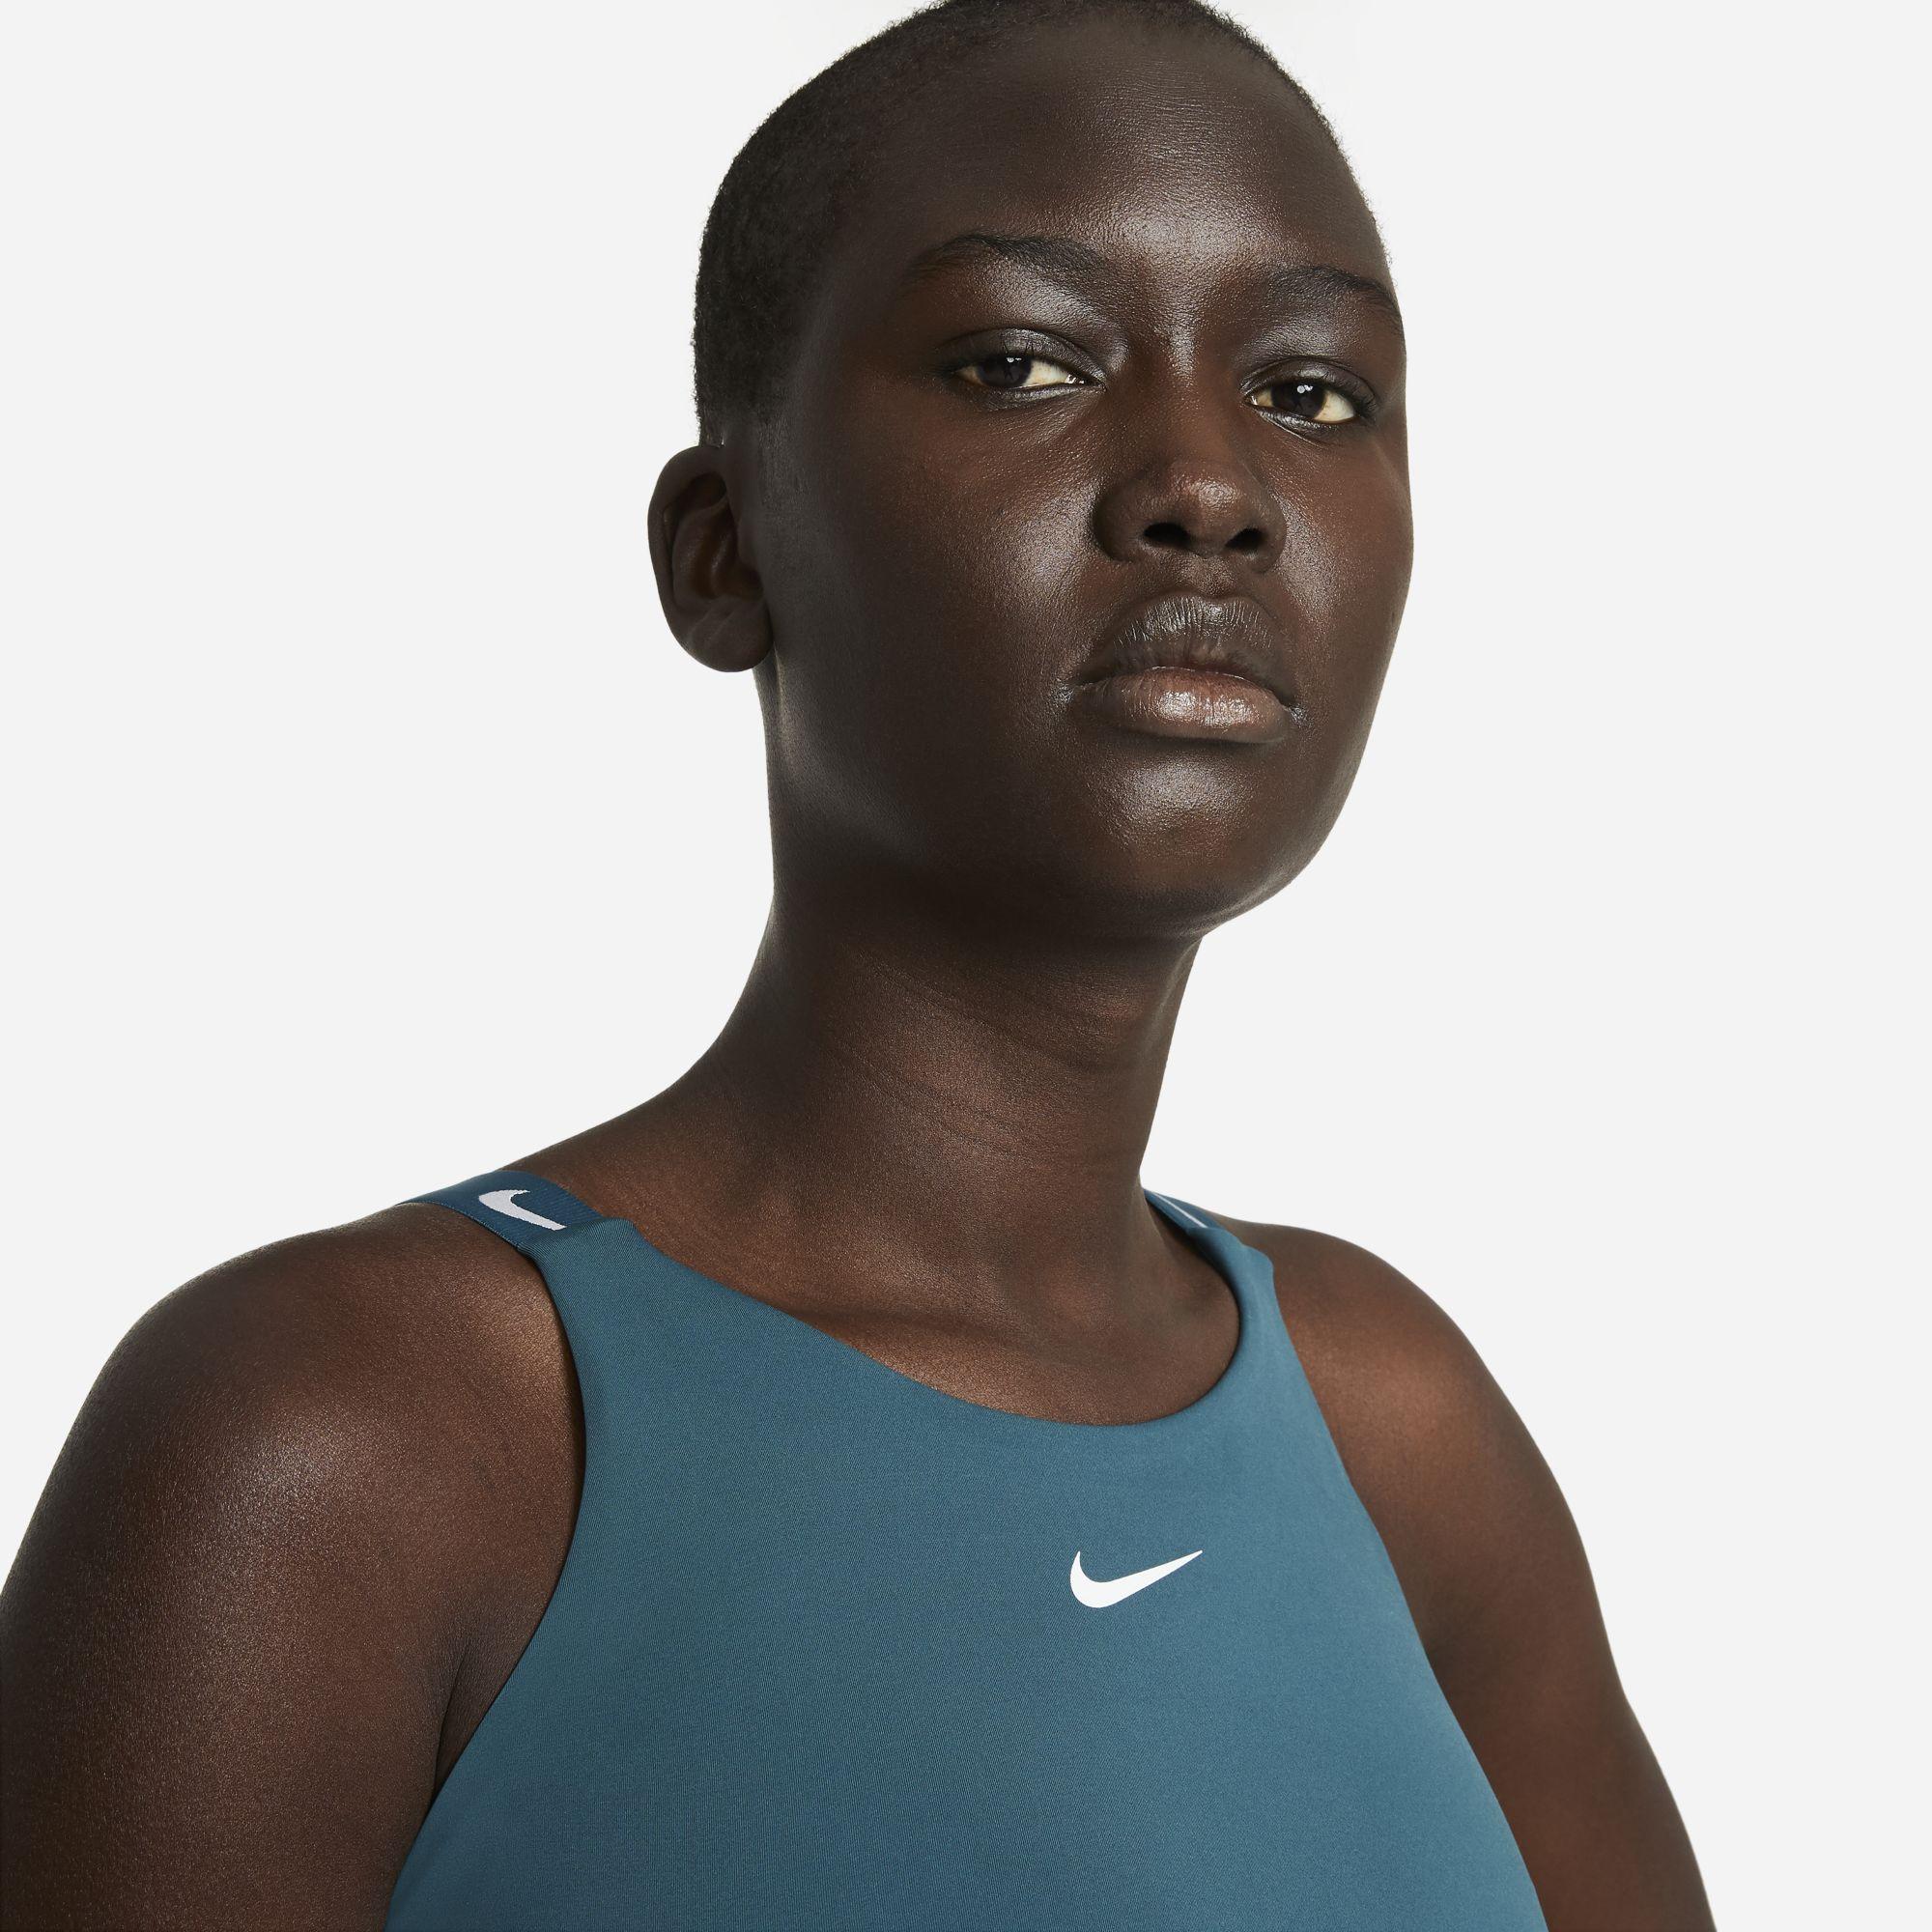 Nike Pro Dri-fit Women's Shelf-bra Cropped Tank